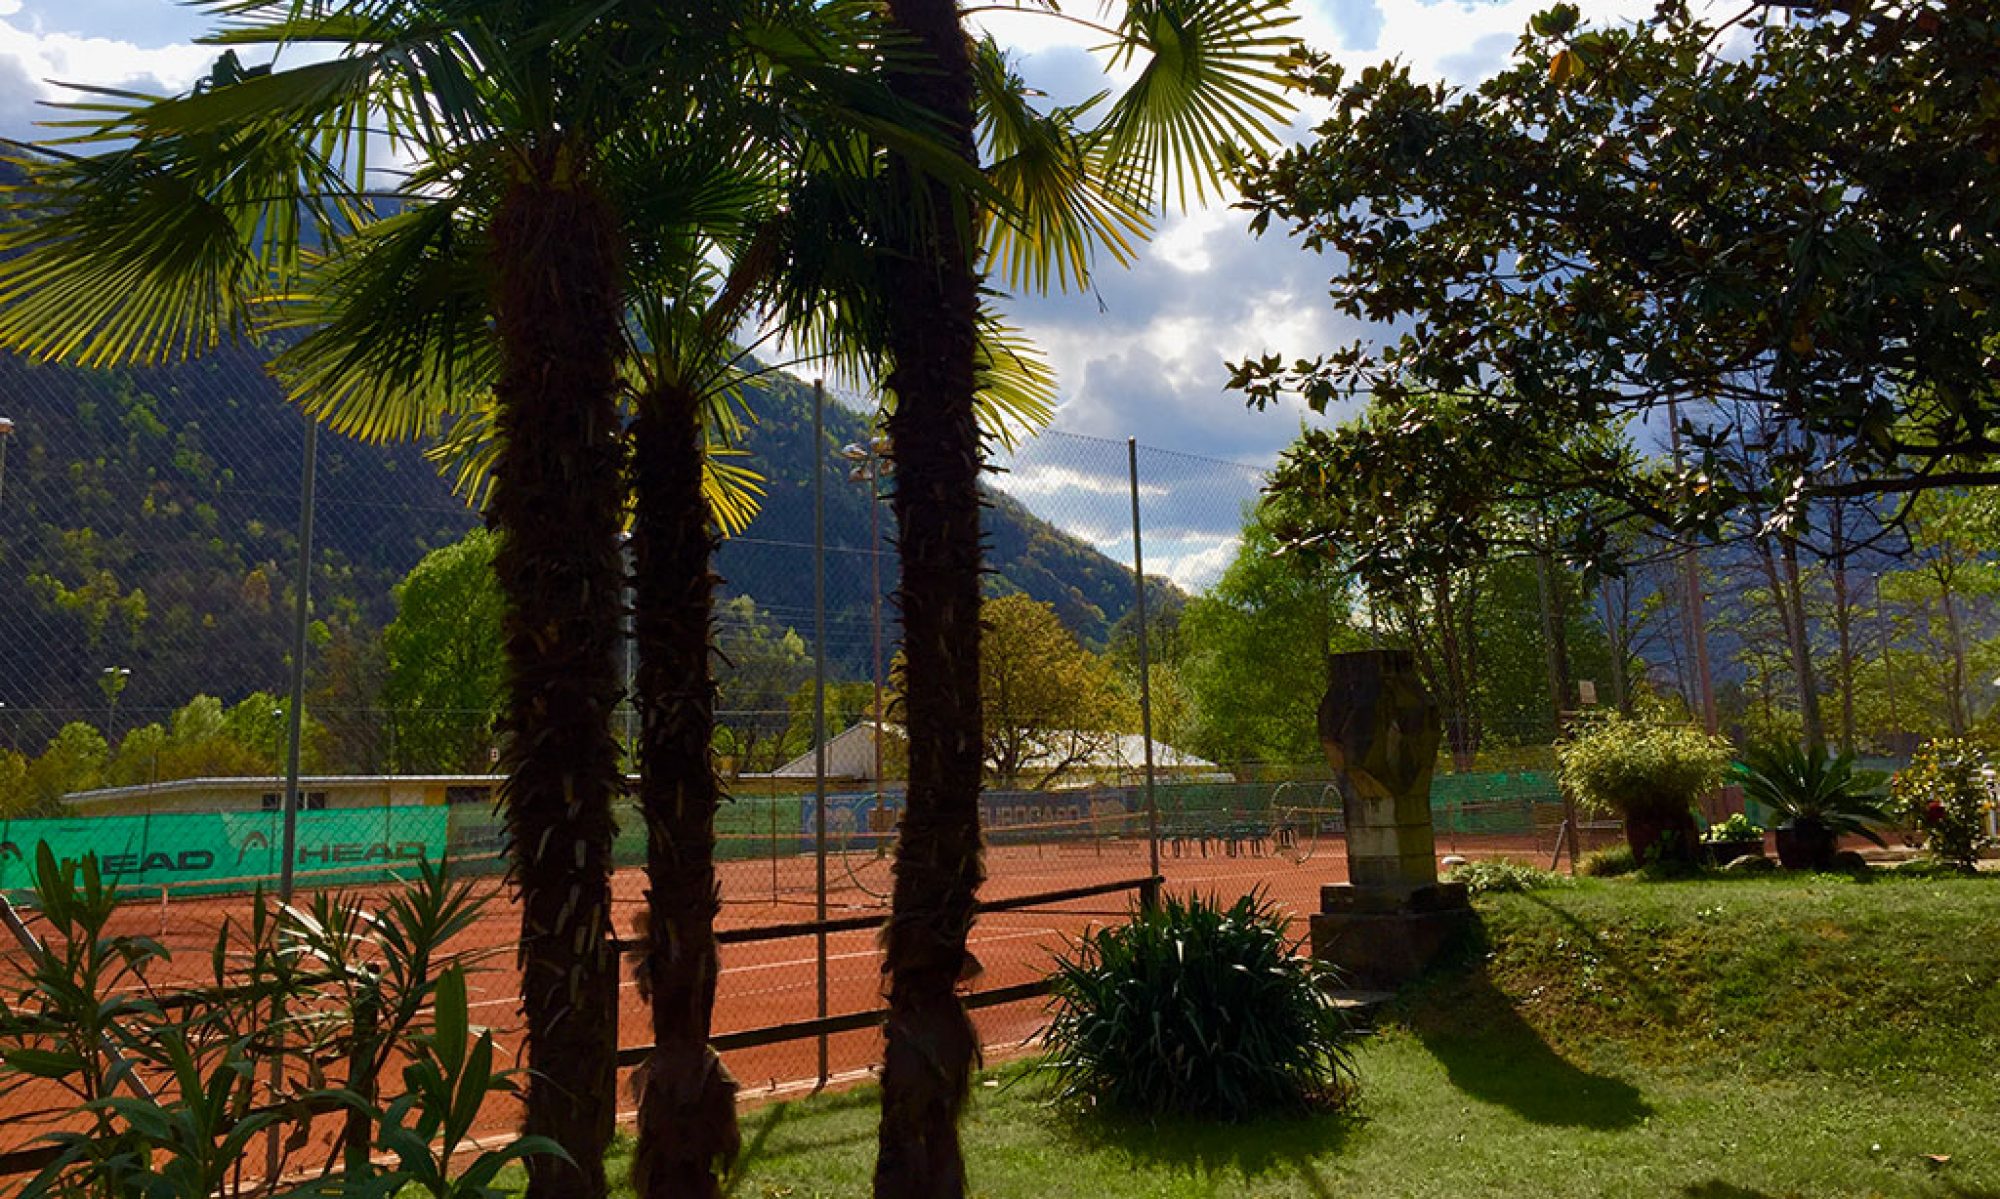 Tennis Club Pedemonte Verscio